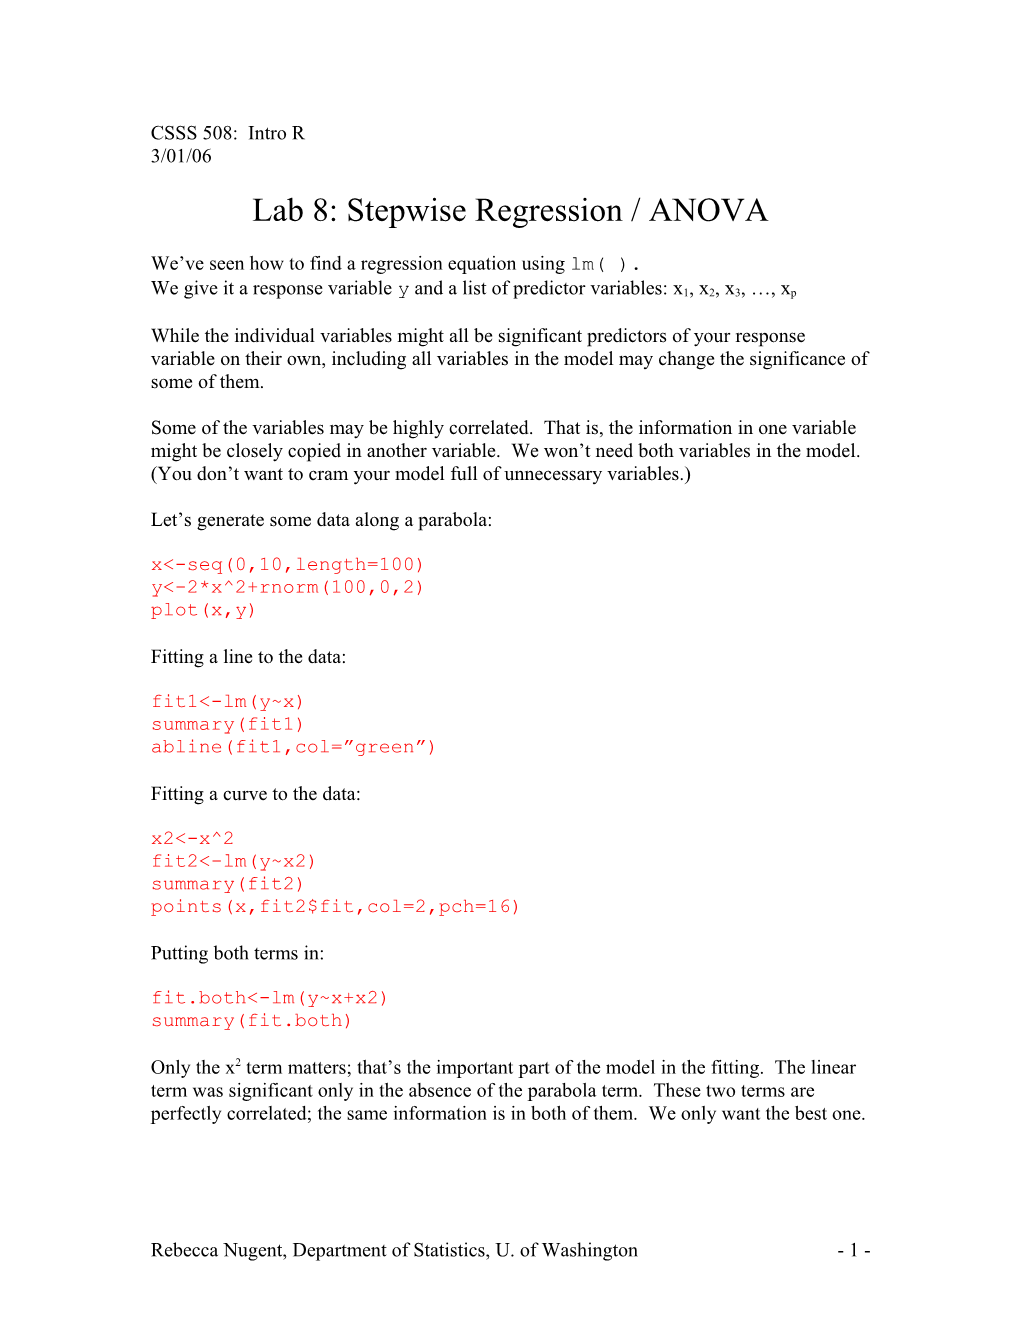 Lab 8: Stepwise Regression / ANOVA